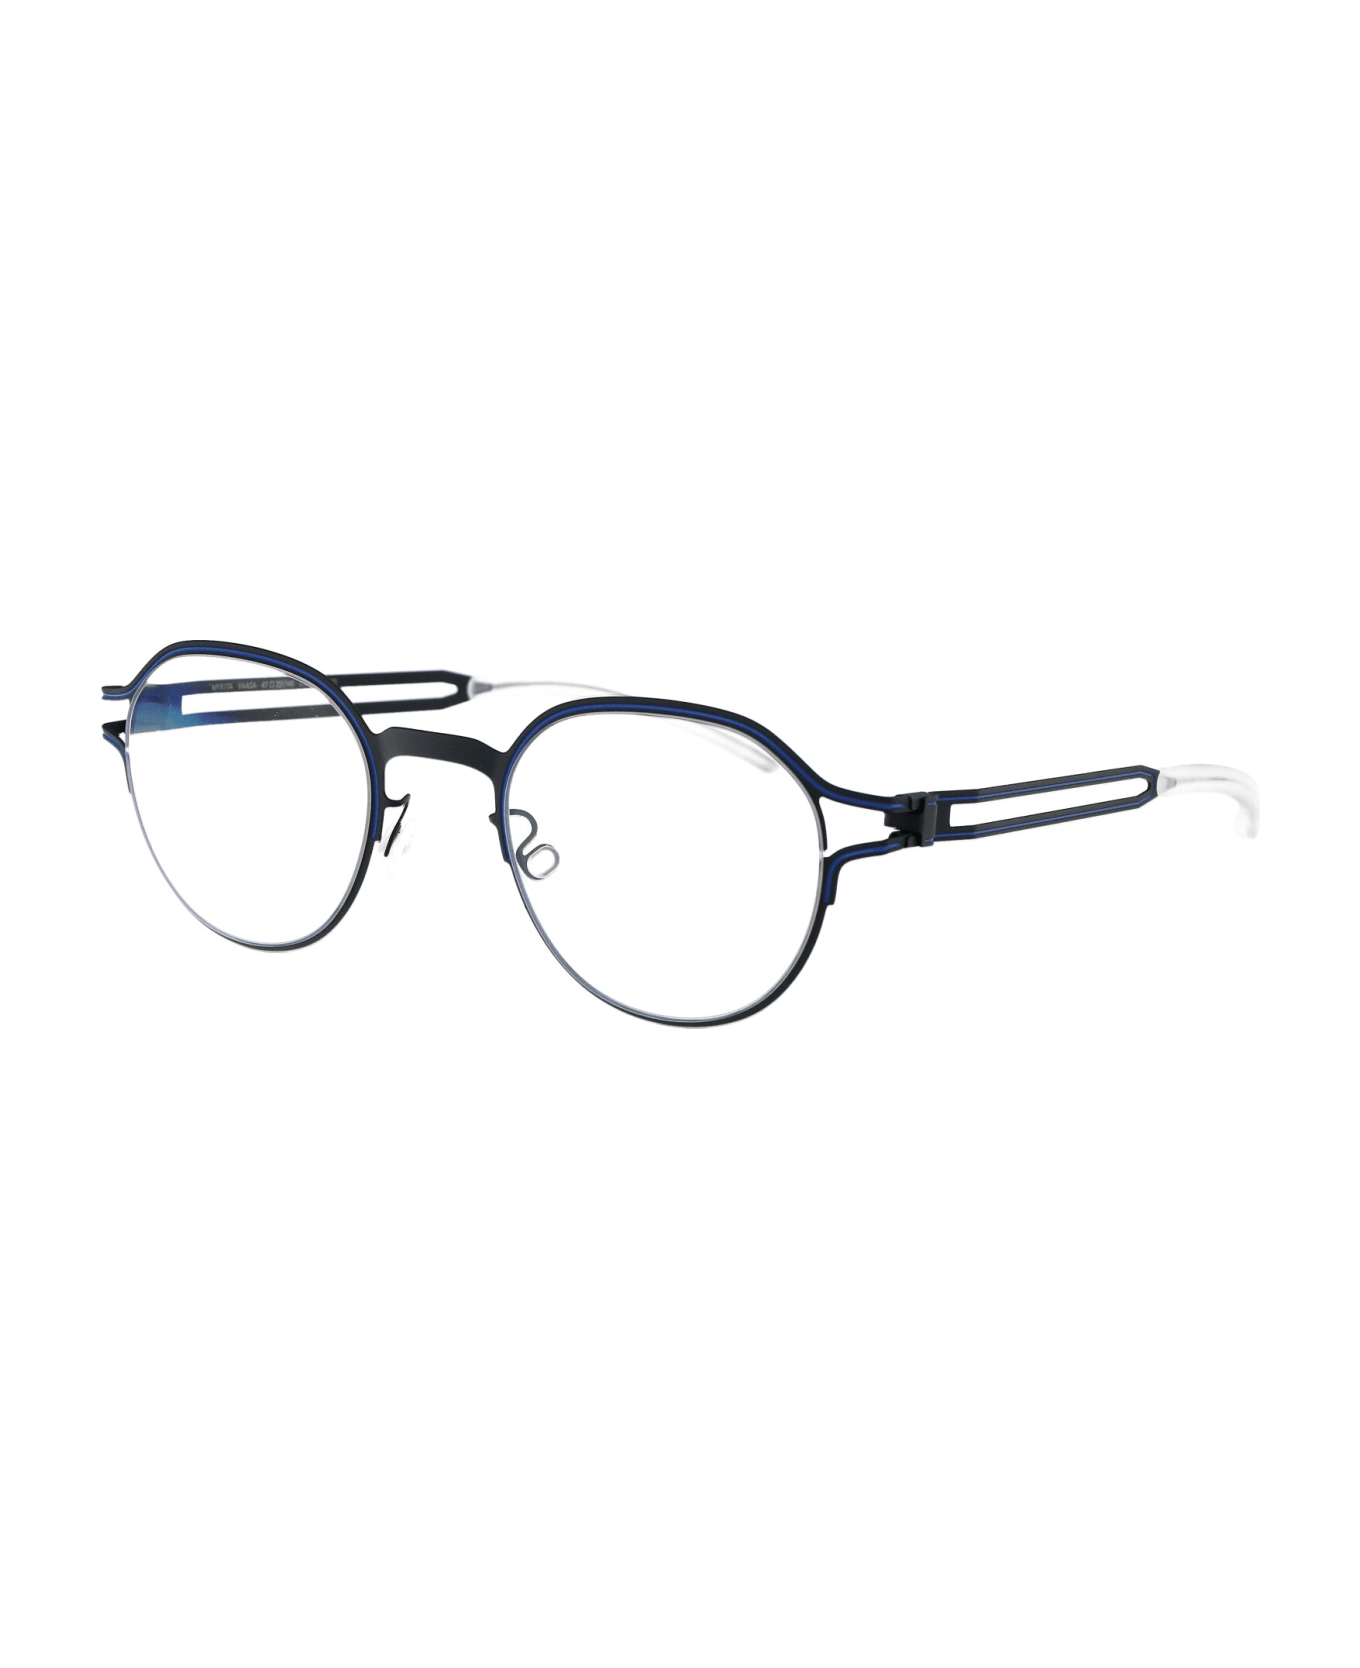 Mykita Vaasa Glasses - 514 Indigo/Yale Blue Clear アイウェア